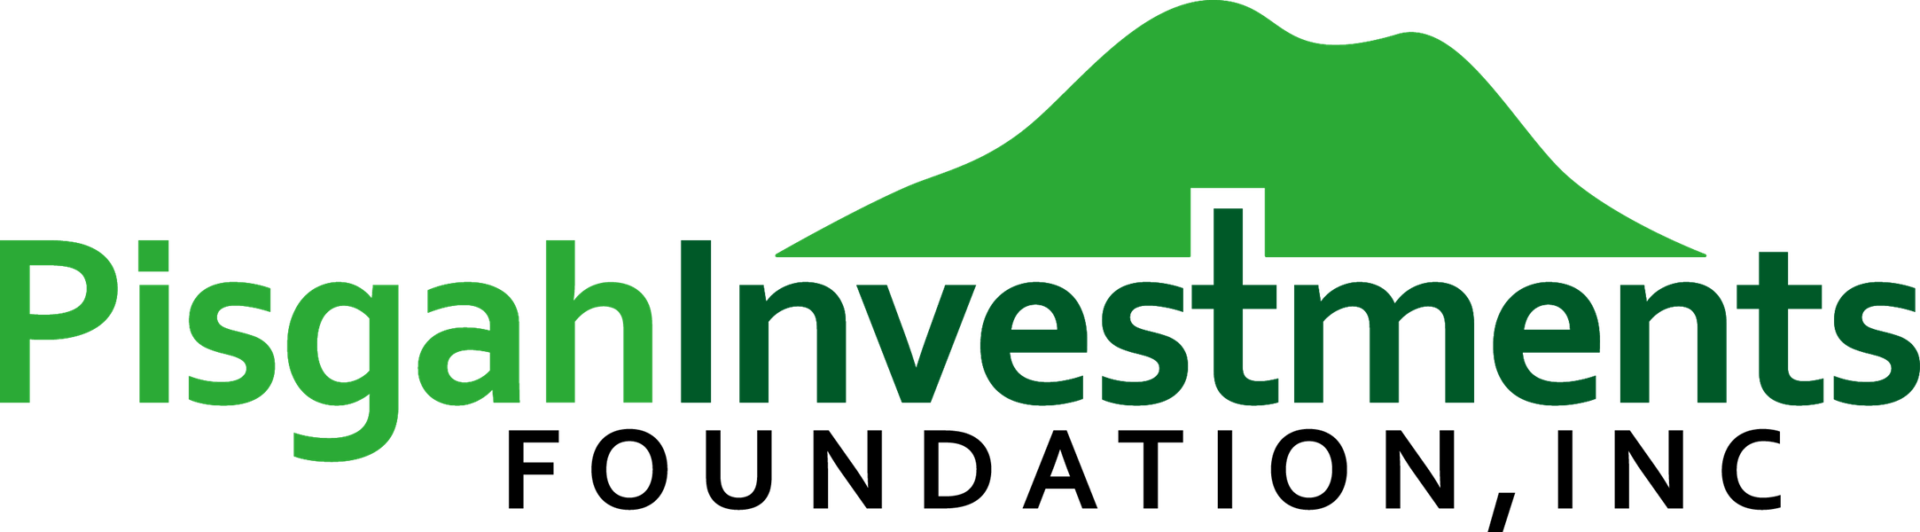 Pisgah Investments Foundation Logo